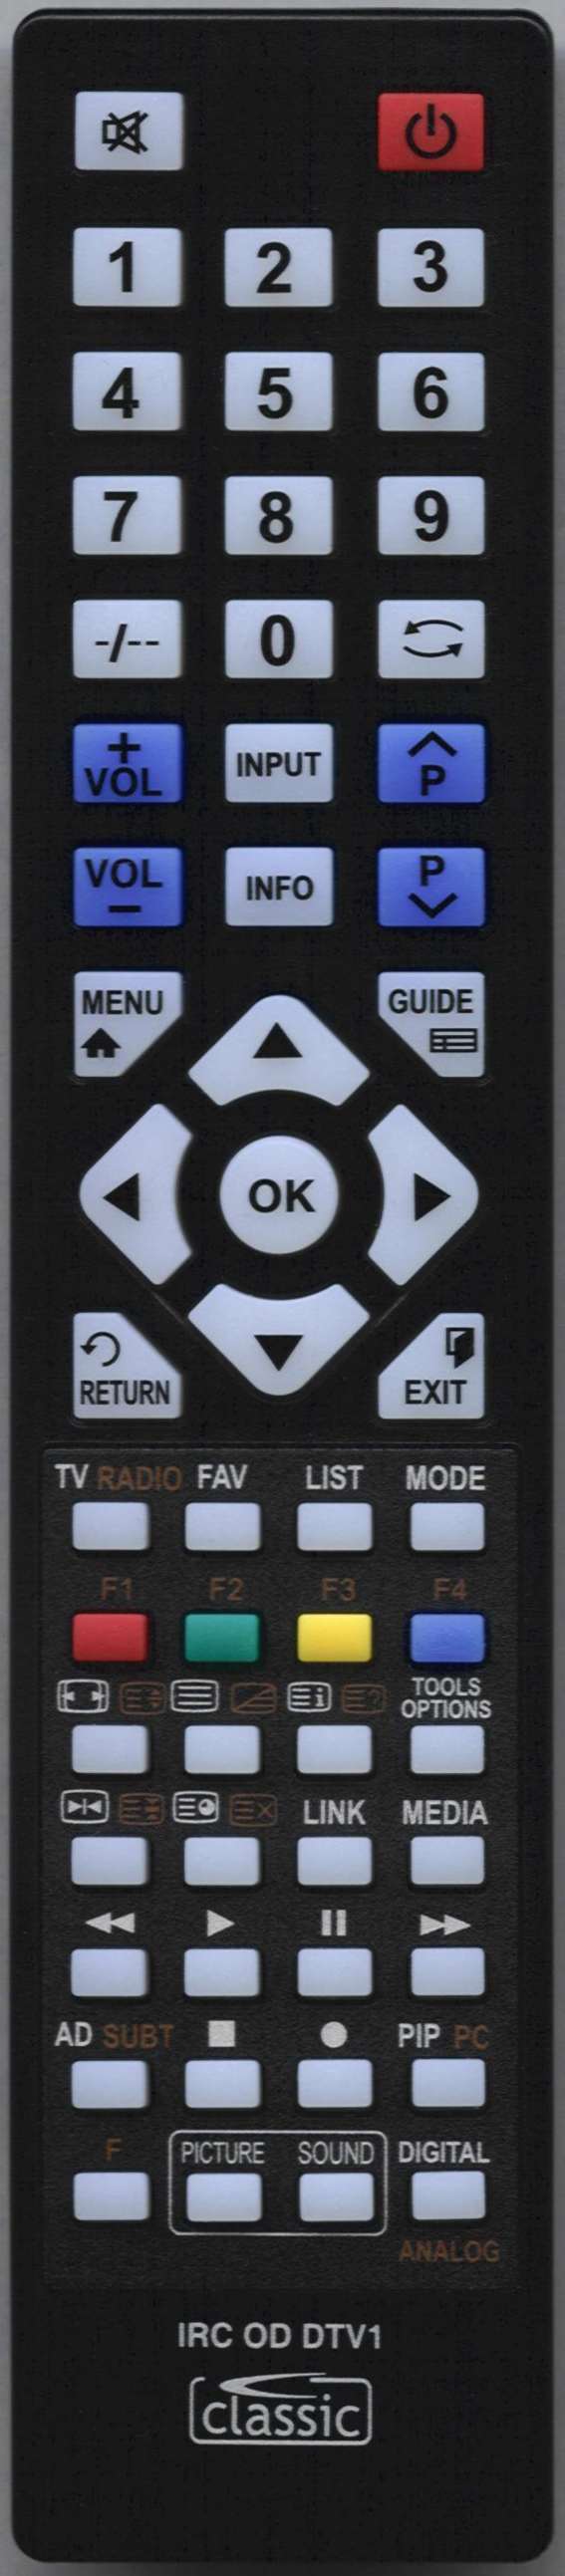 SEIKI SE24FY02UK Remote Control